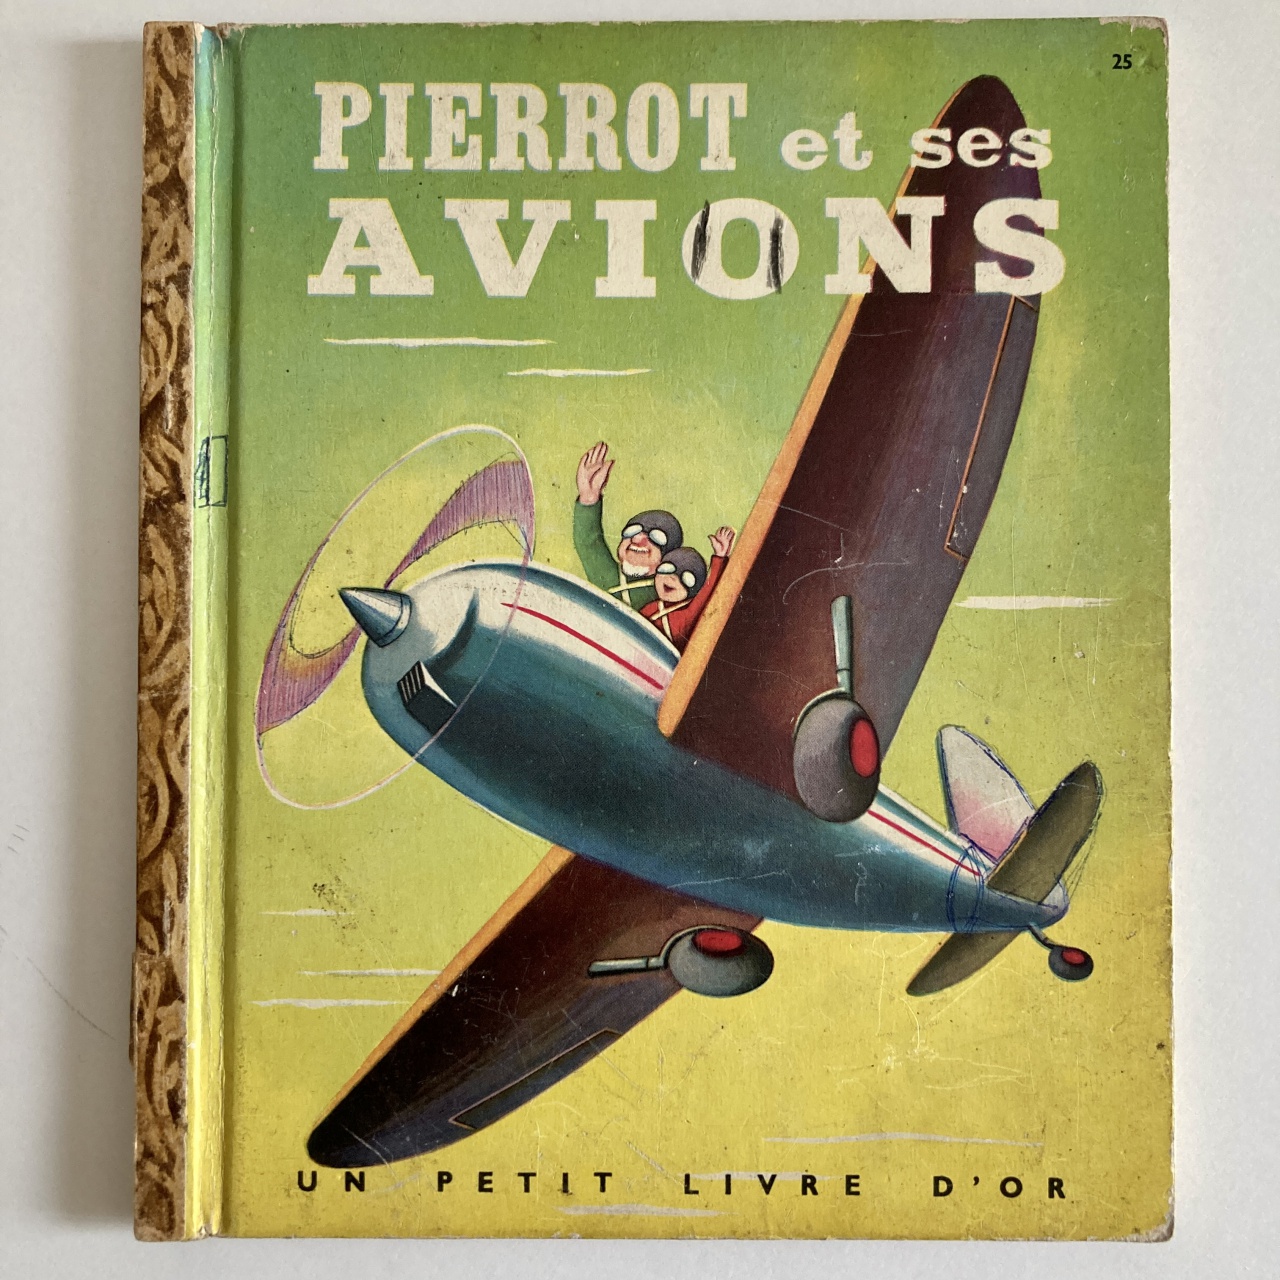 Pierrot et ses avions